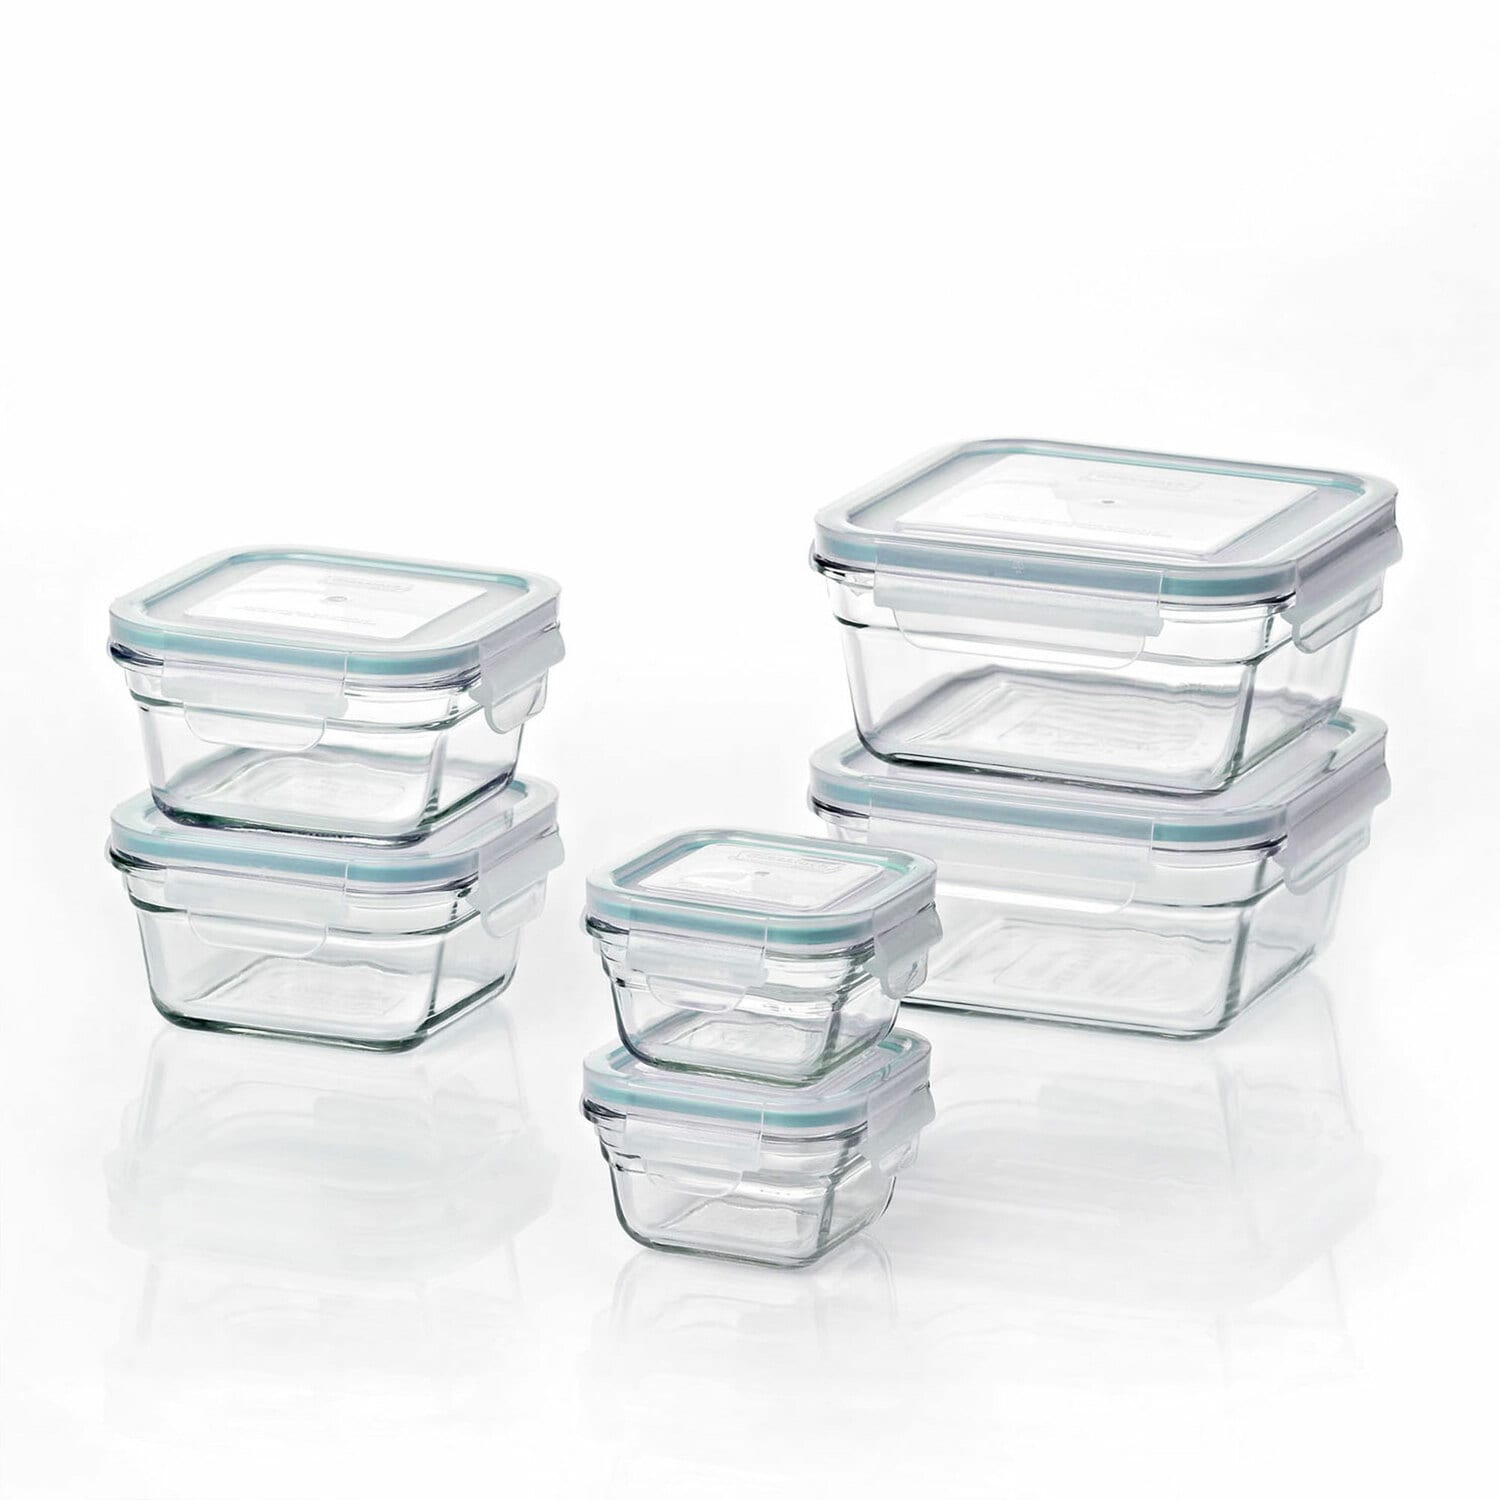 Anchor Hocking 5-Pack Multisize Bpa-free Reusable Food Storage